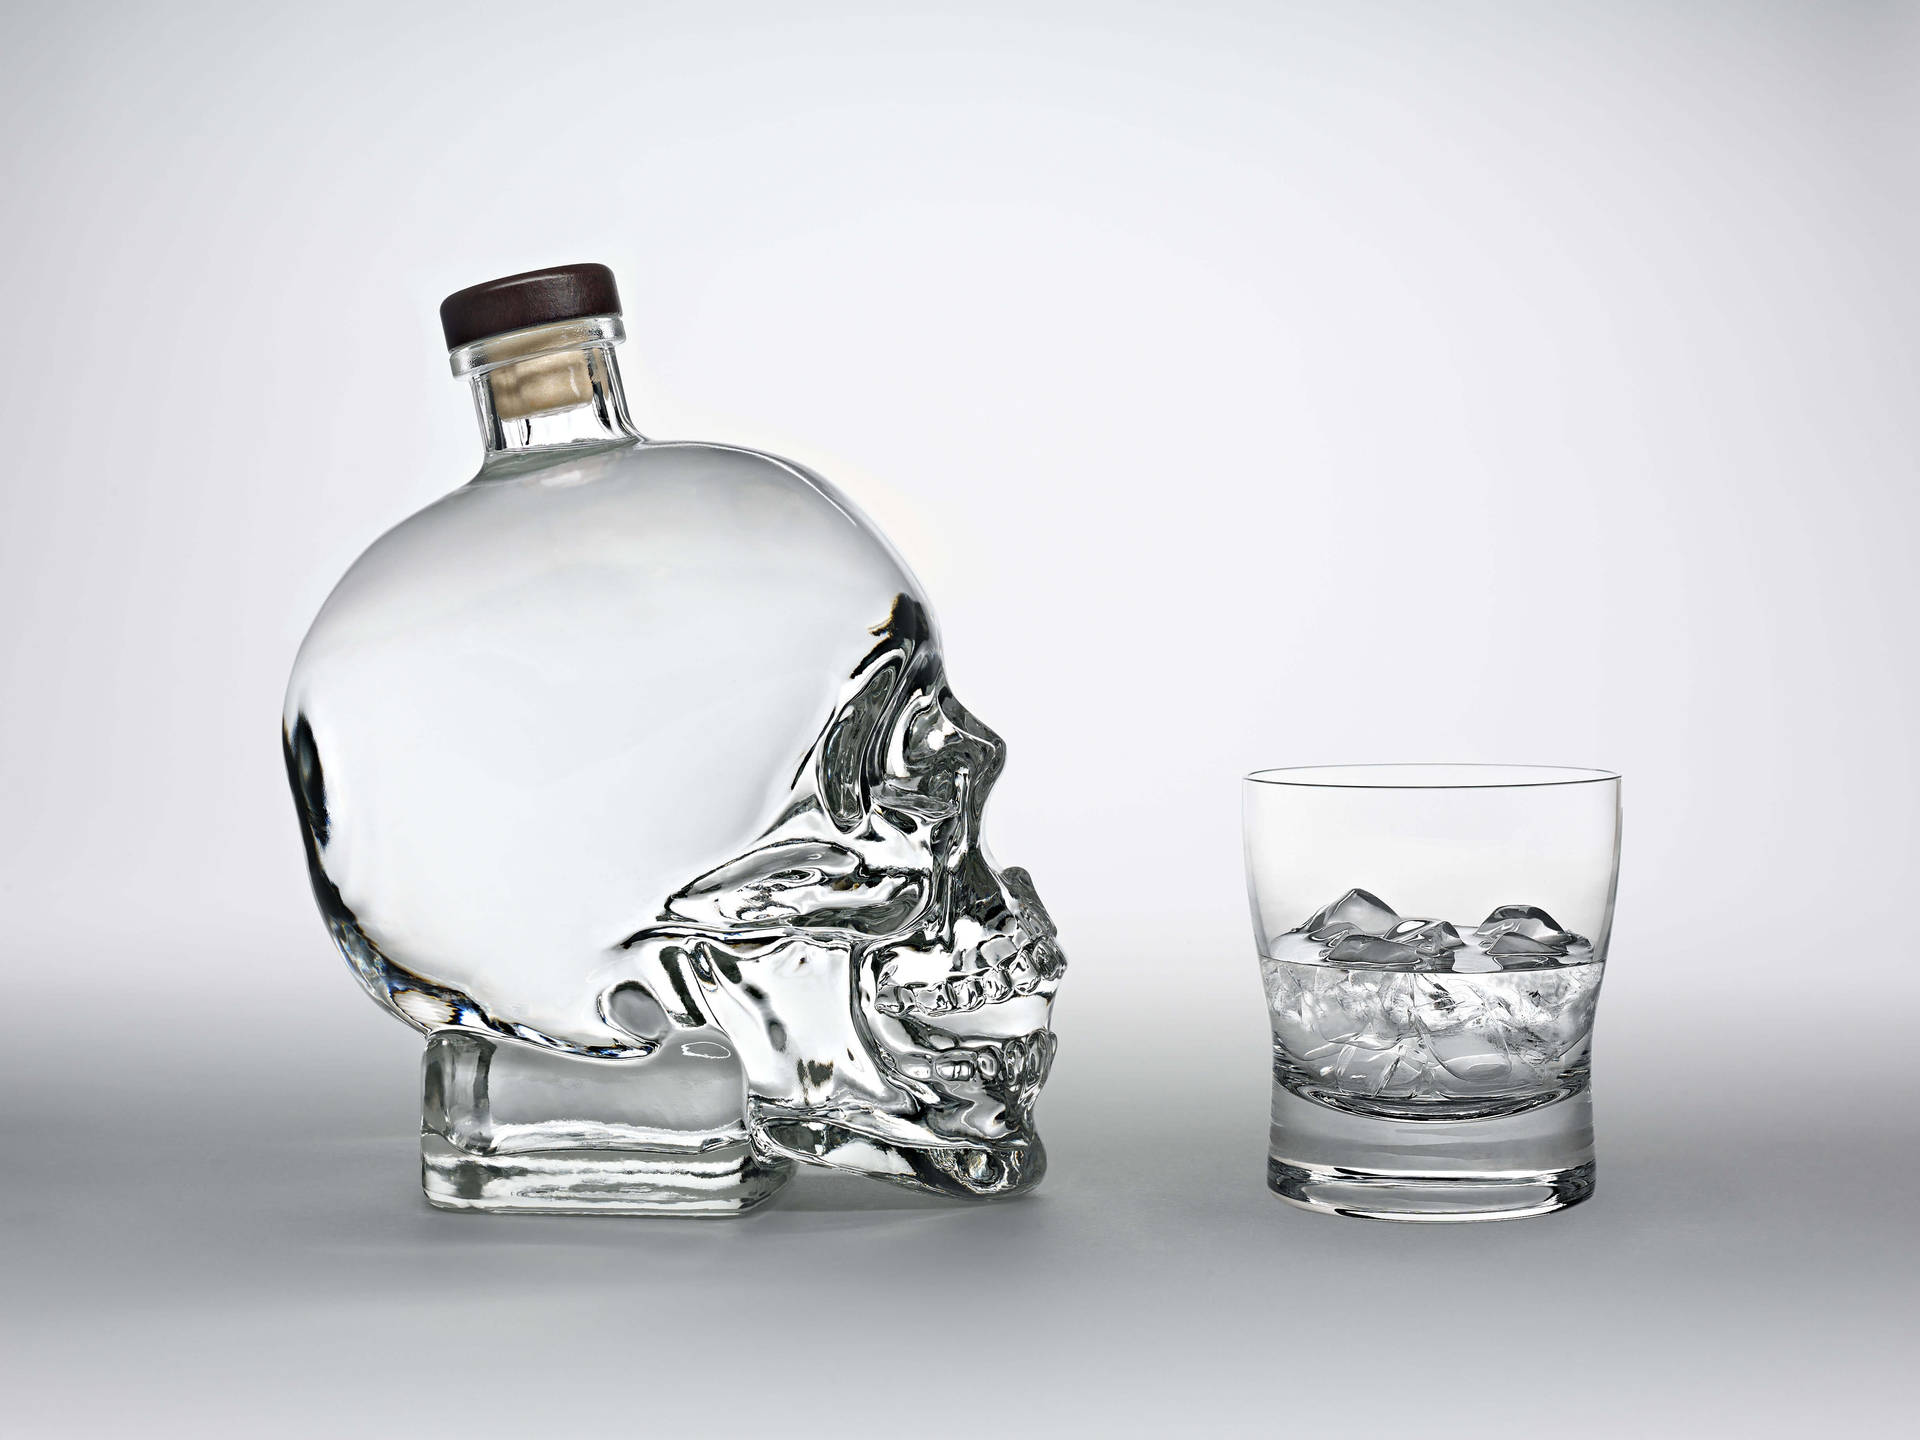 Crystal Head Vodka Bottle Facing A Glass Wallpaper